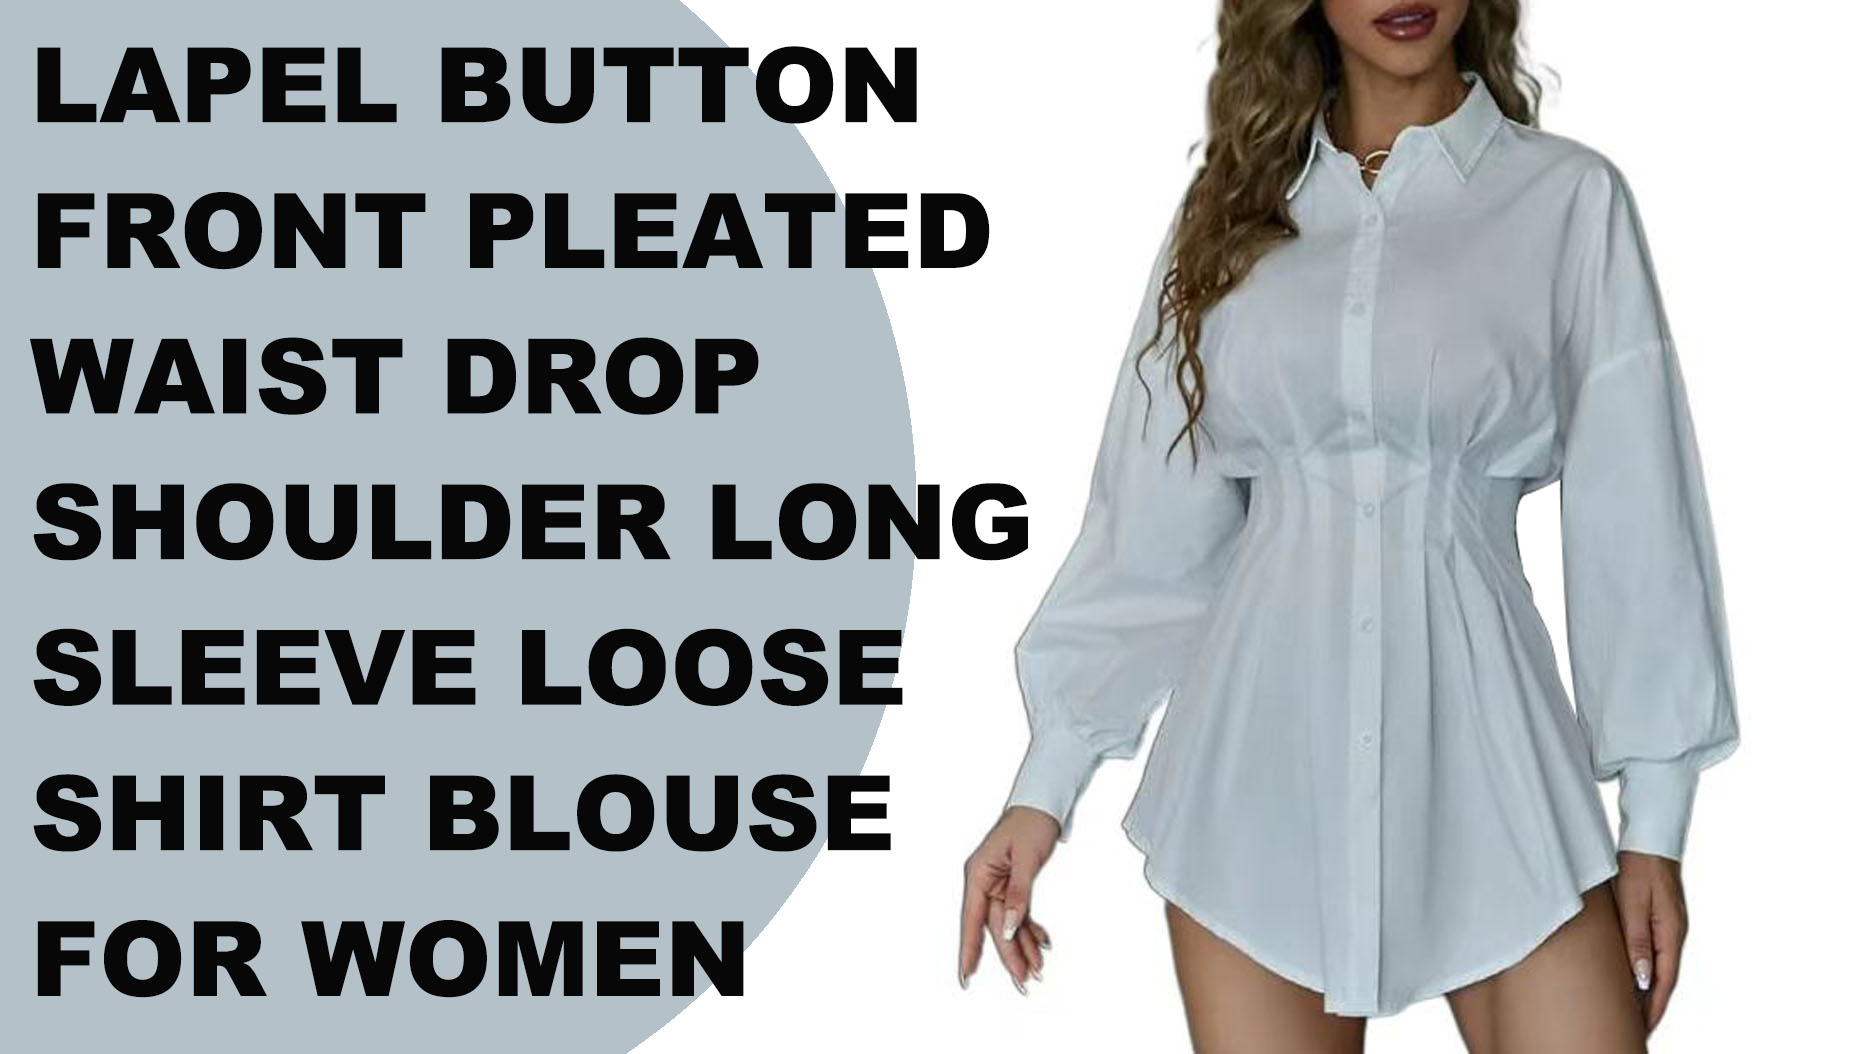 Autumn lapel button front pleated waist drop shoulder long sleeve loose shirt blouse for women